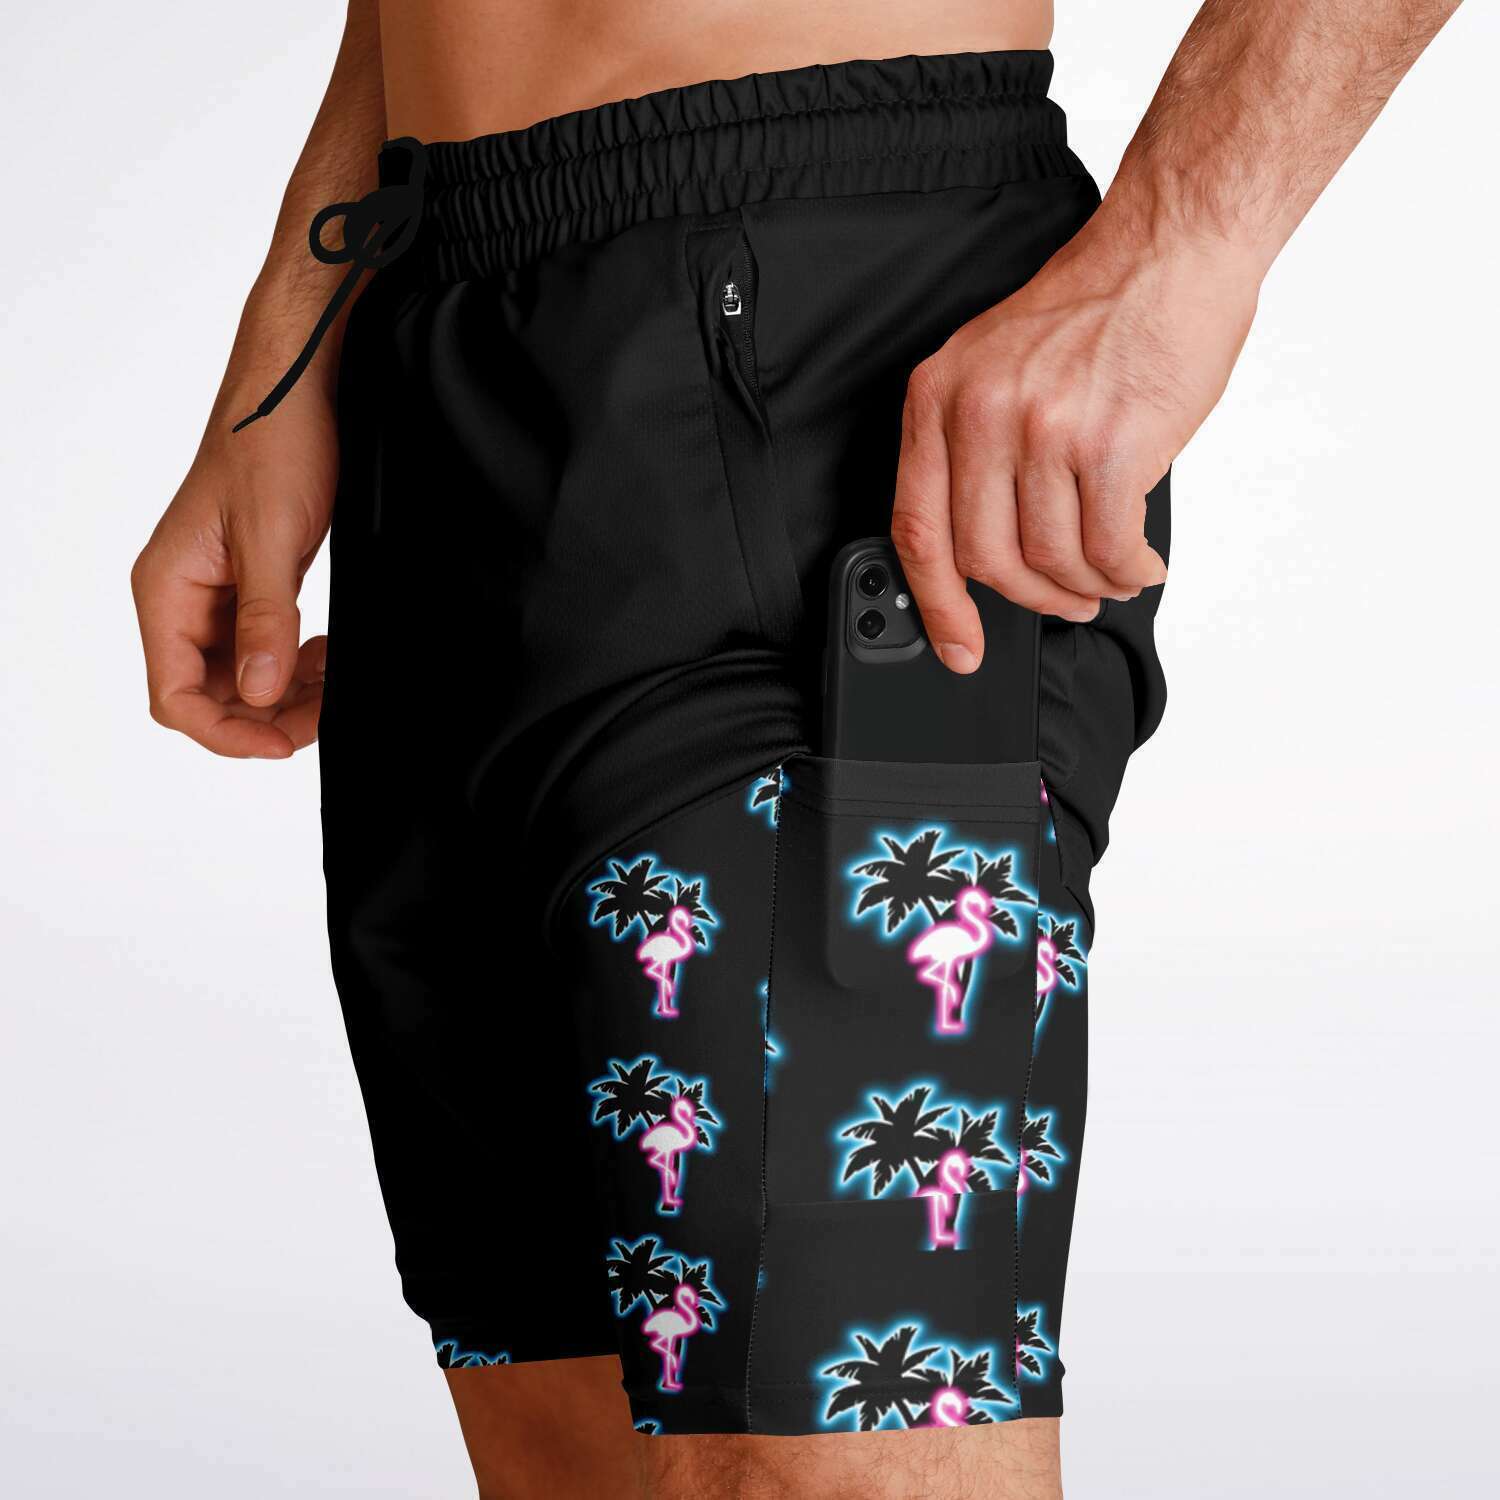 Rad Palm Neon Flamingo Men's 2-in-1 Shorts